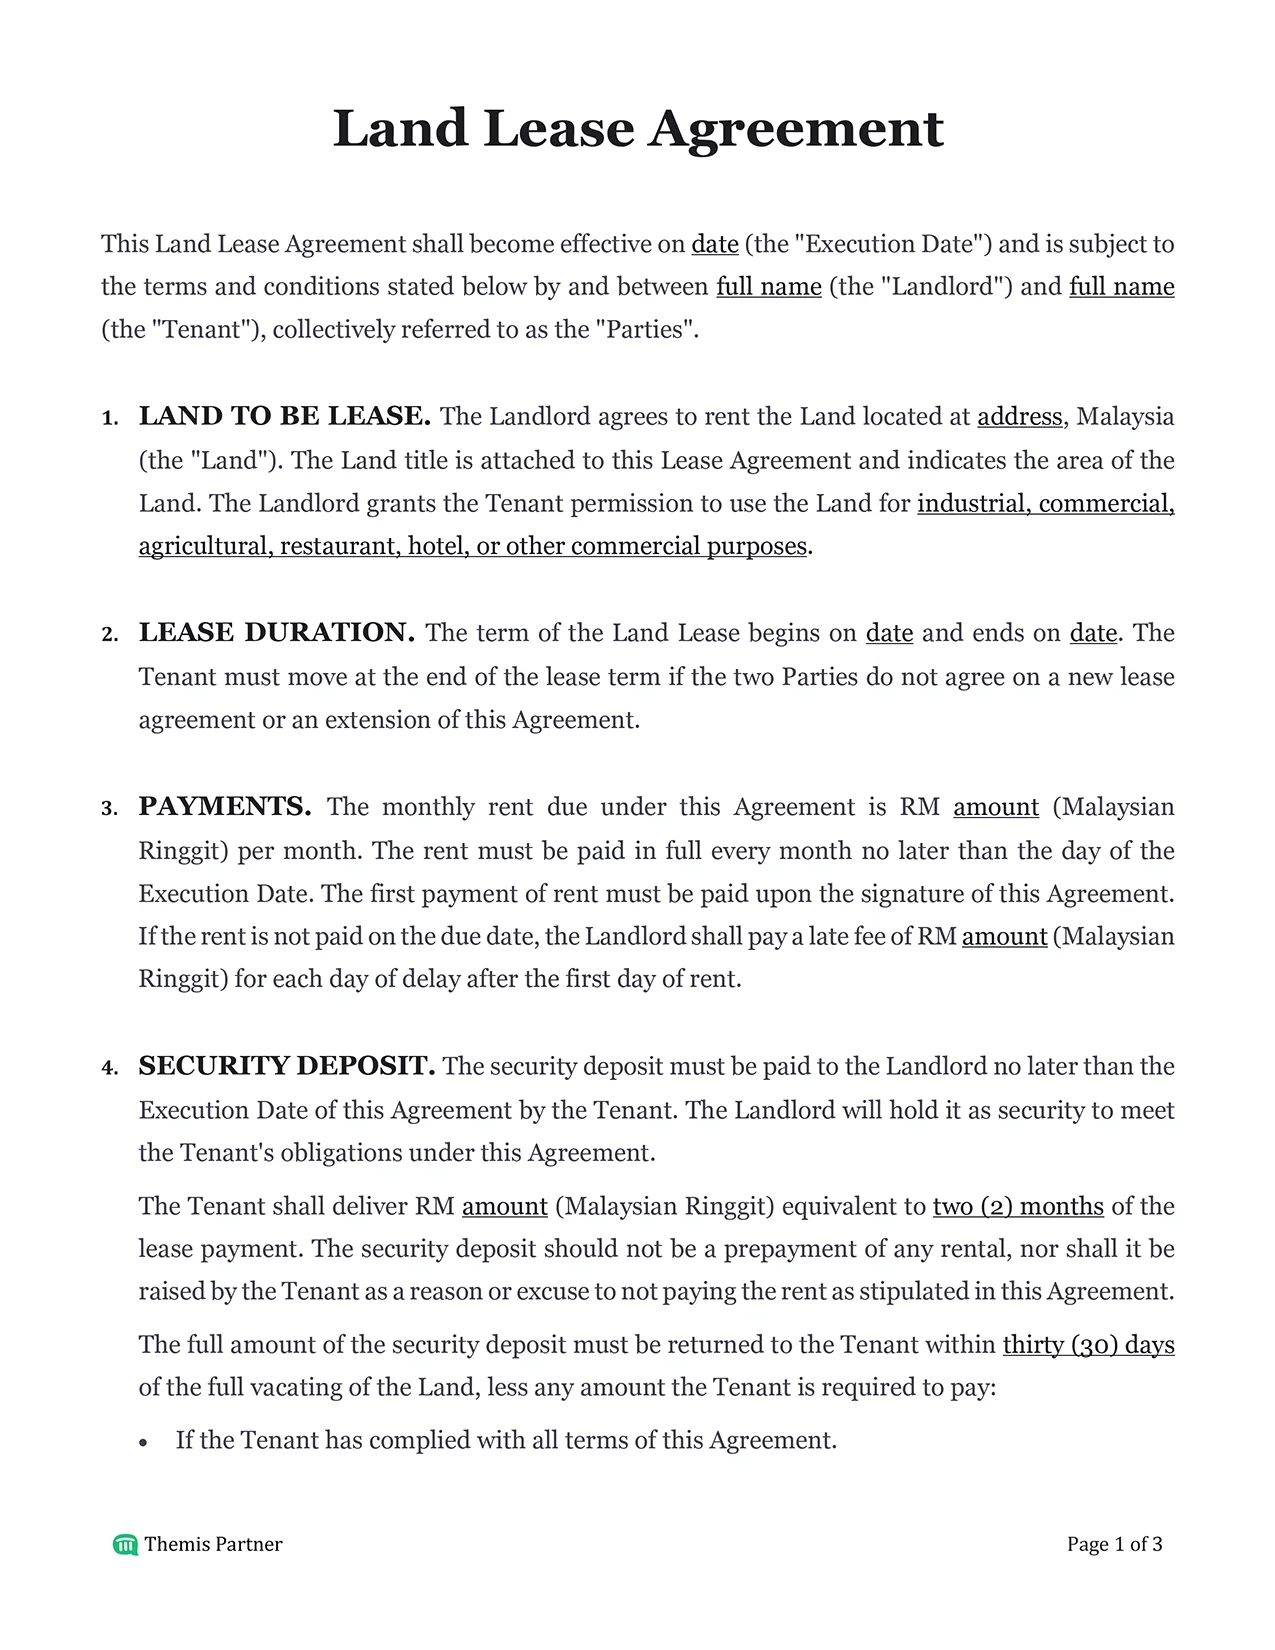 Land lease agreement Malaysia 1